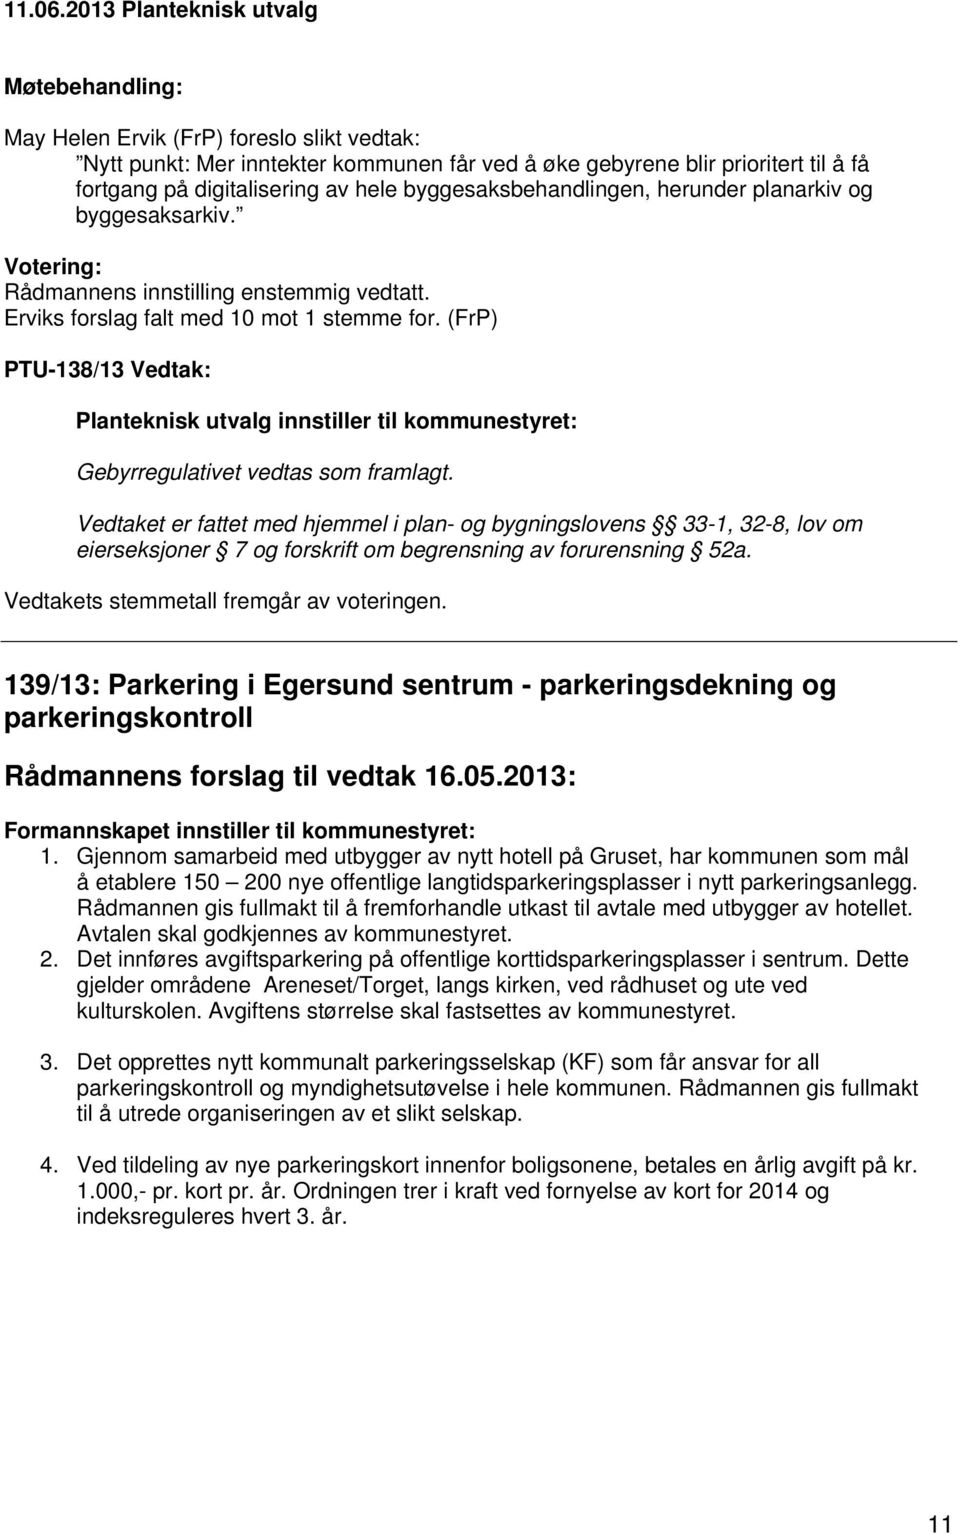 (FrP) PTU-138/13 Vedtak: Planteknisk utvalg innstiller til kommunestyret: Gebyrregulativet vedtas som framlagt.